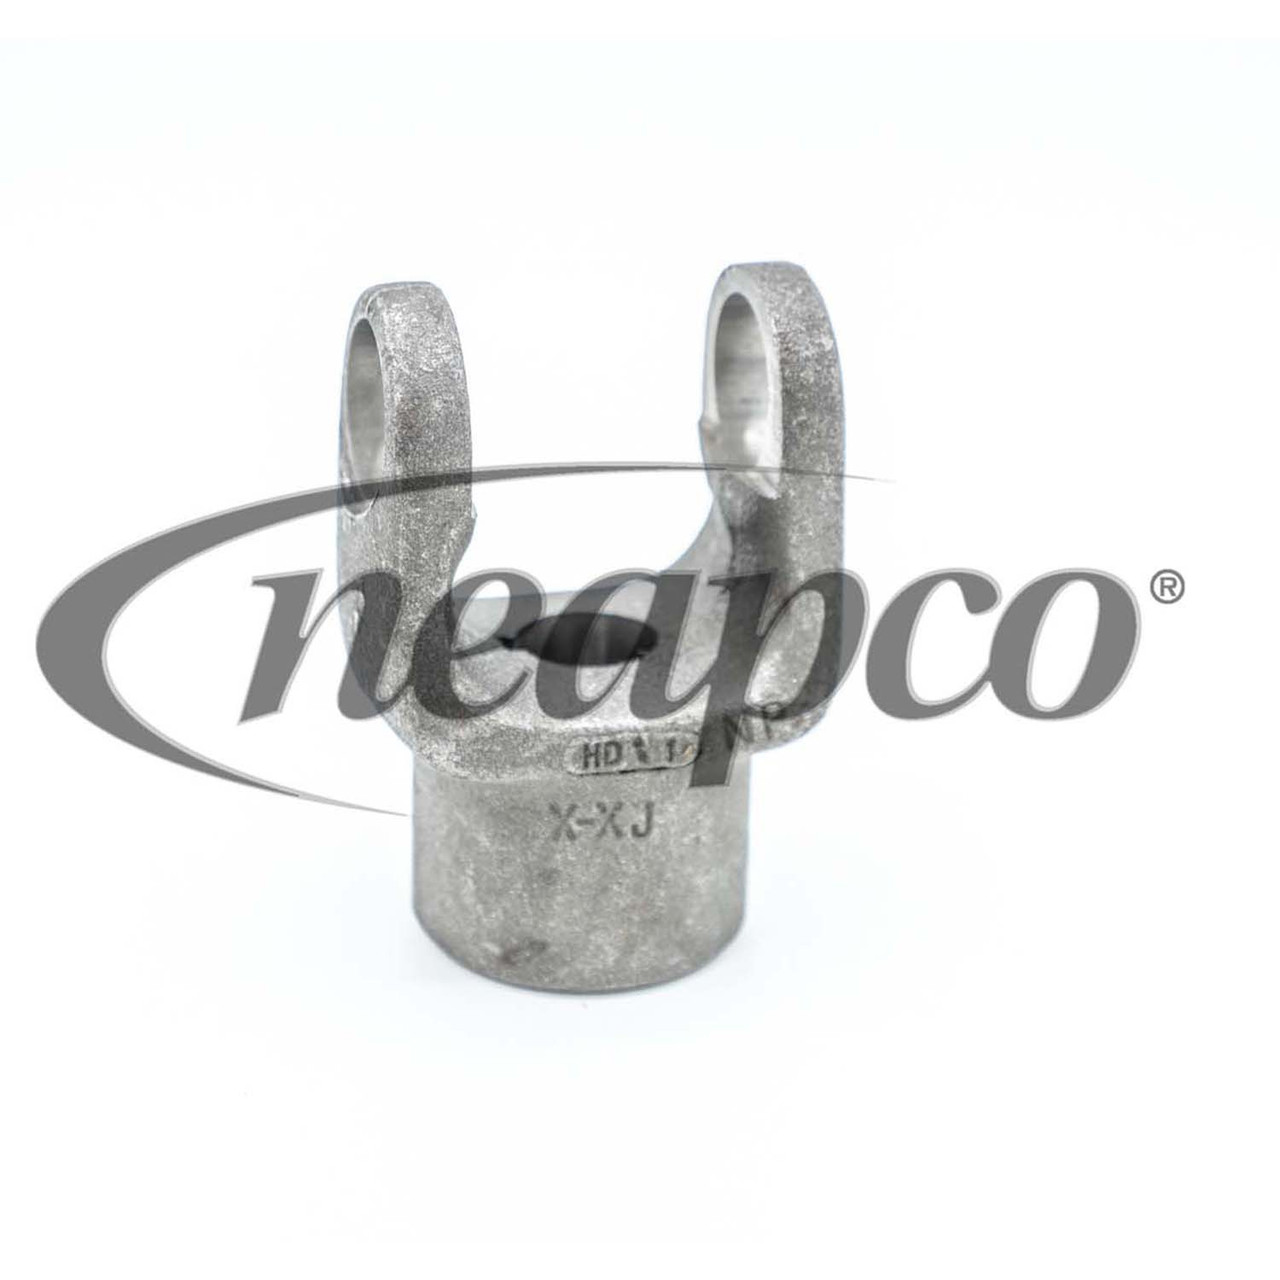 1" Round - Neapco® 1200 Series End Yoke w/Single Keyway  12-1115